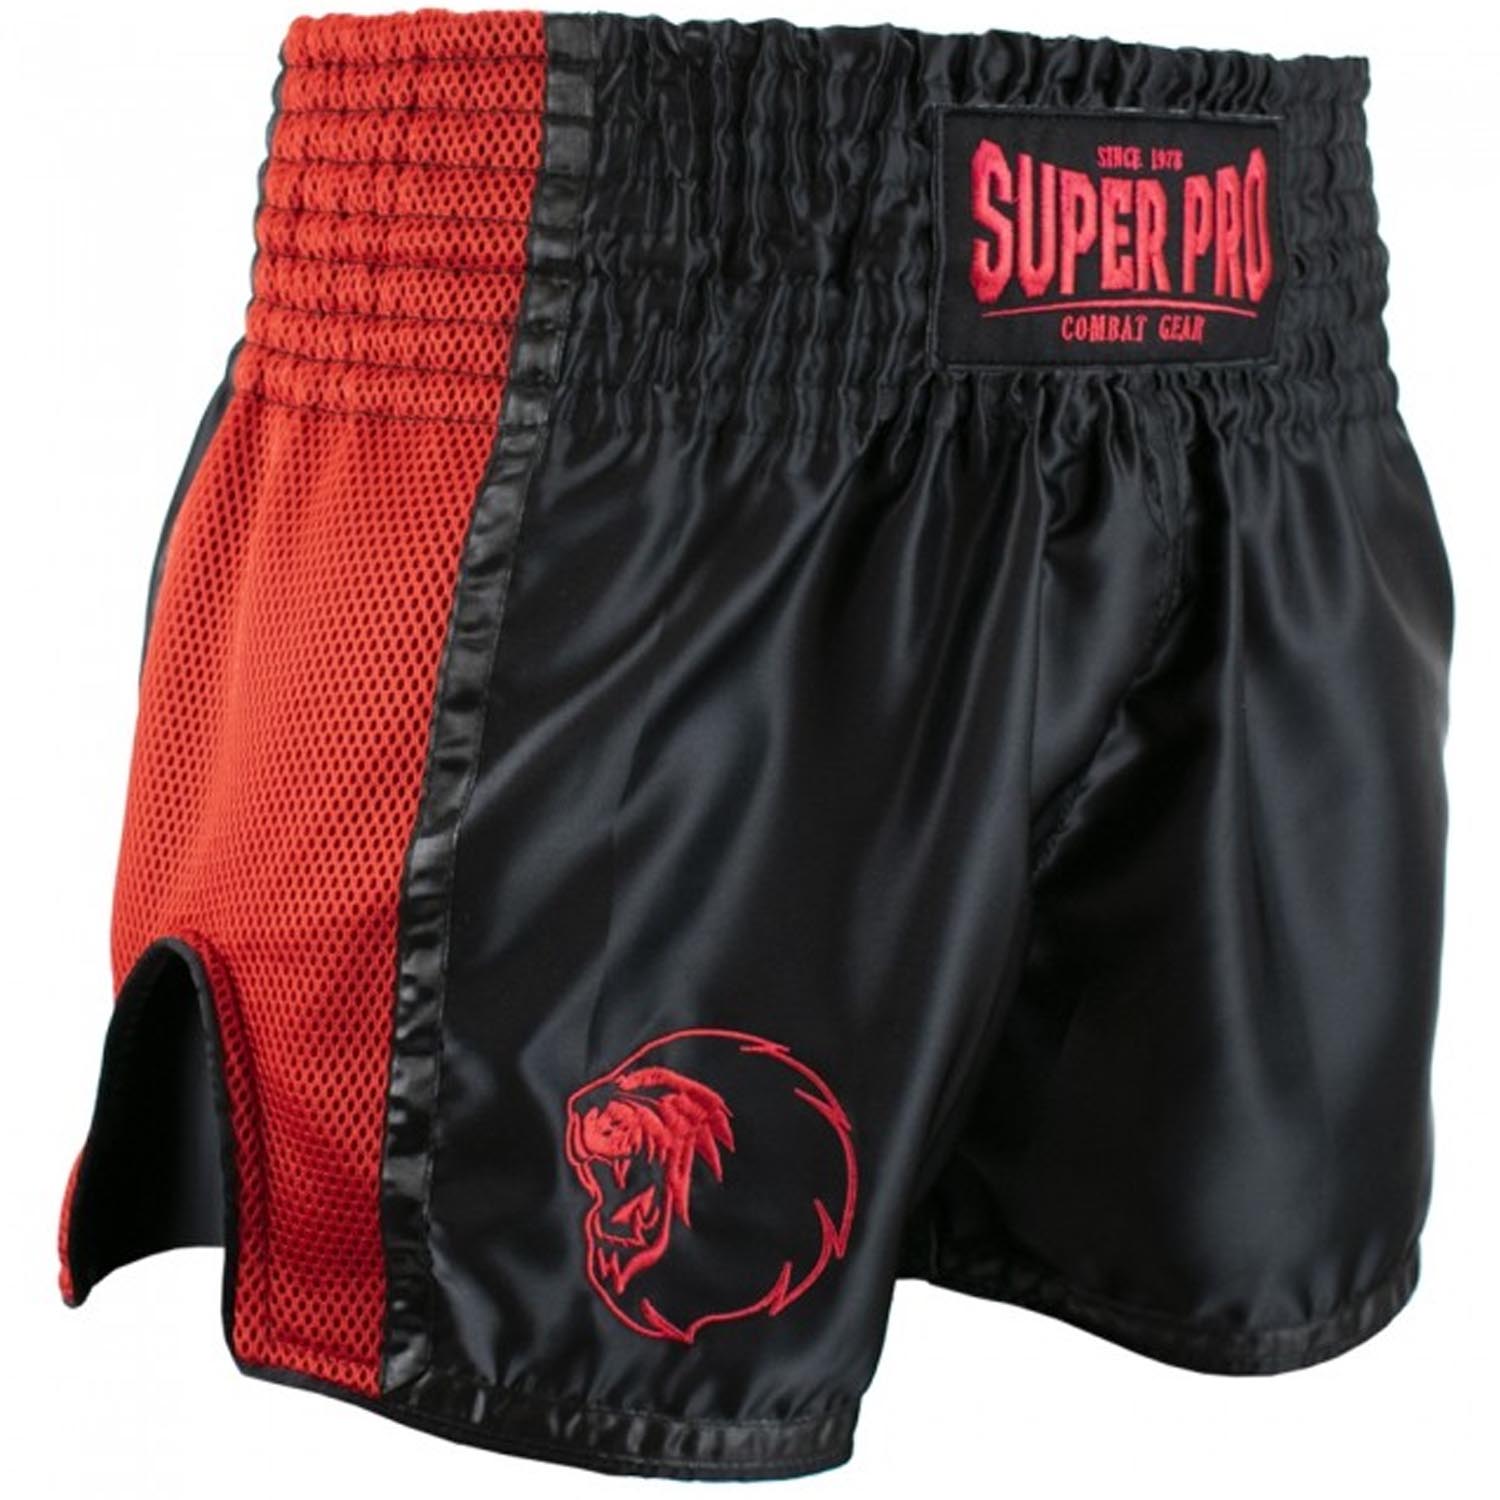 Super Pro Muay Thai Shorts, Brave, black-red, S